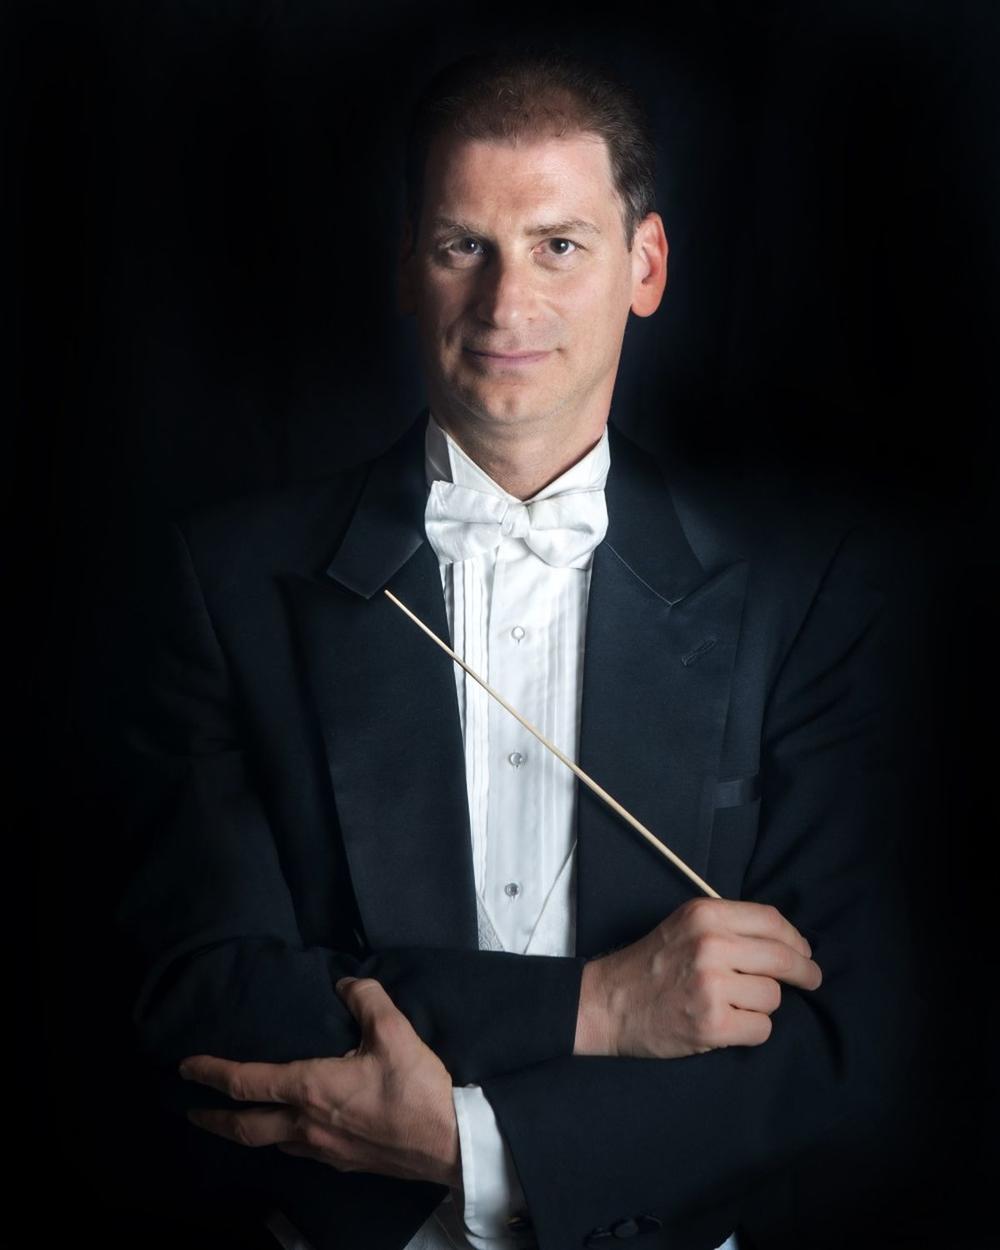 Dirigent Gregory Buchalter, istaknuti član Metropoliten opere u Njujorku.